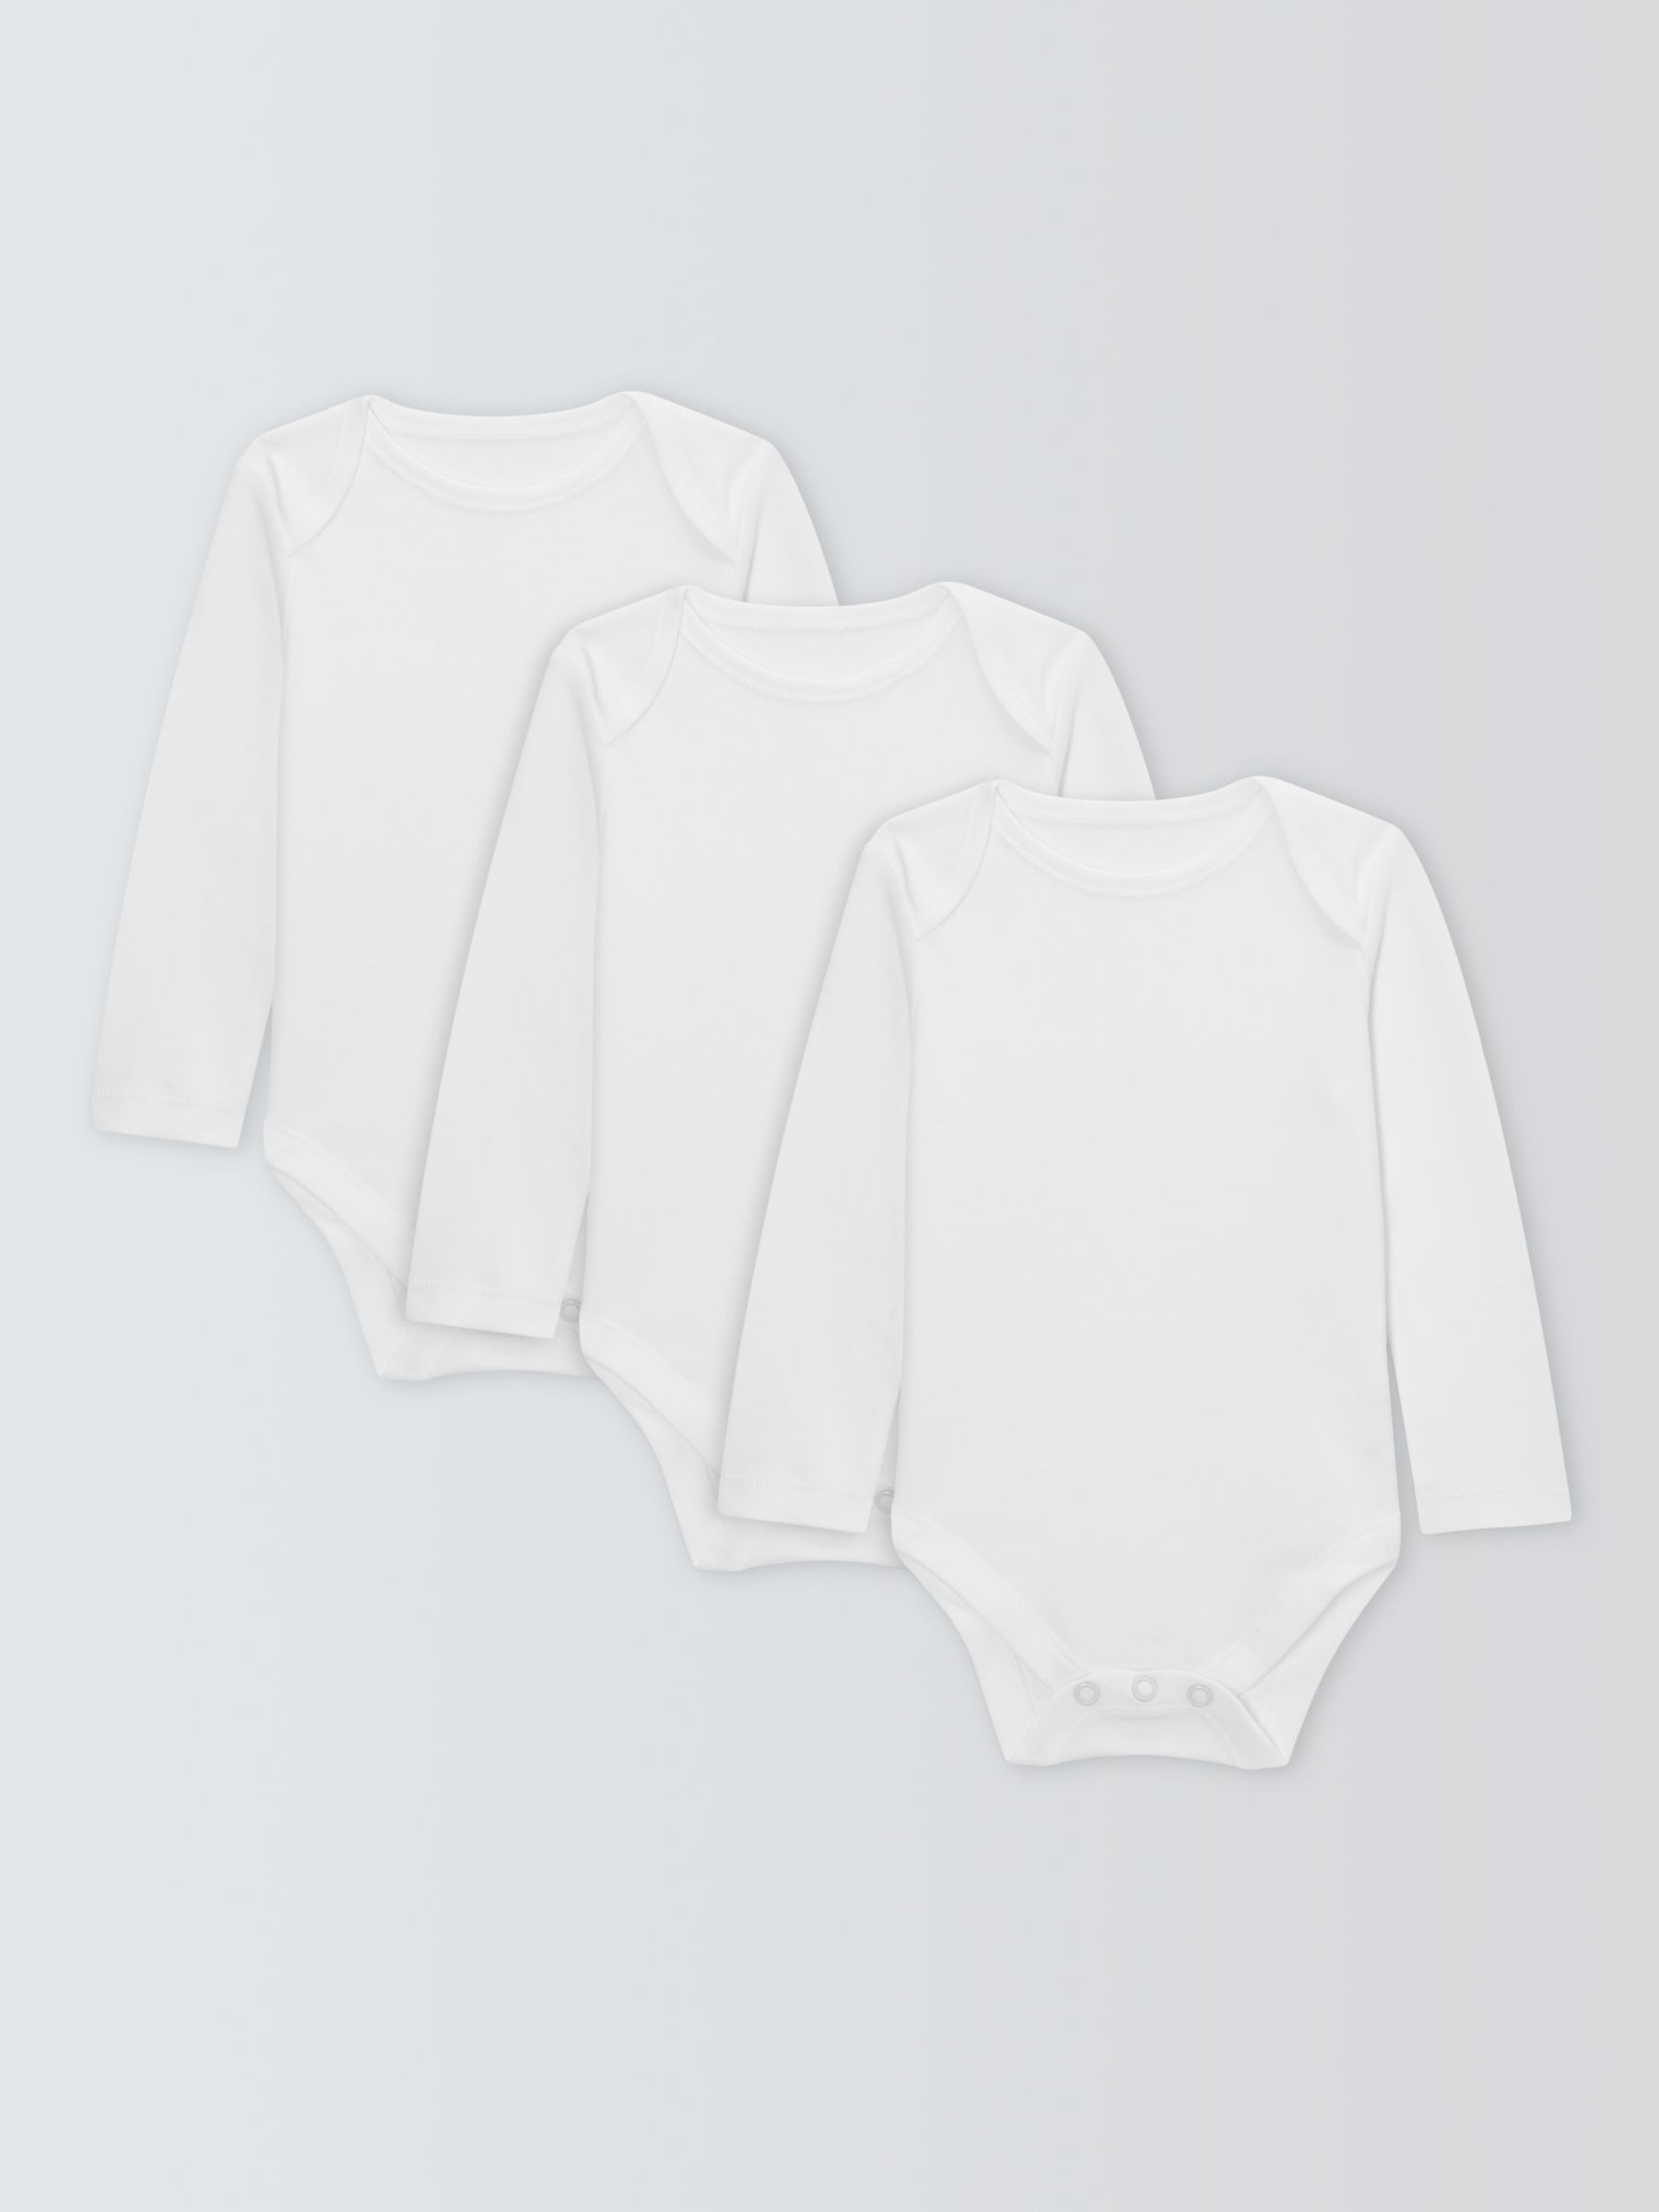 John Lewis Baby Pima Cotton Long Sleeve Bodysuit, Pack of 3, White, 9-12 months